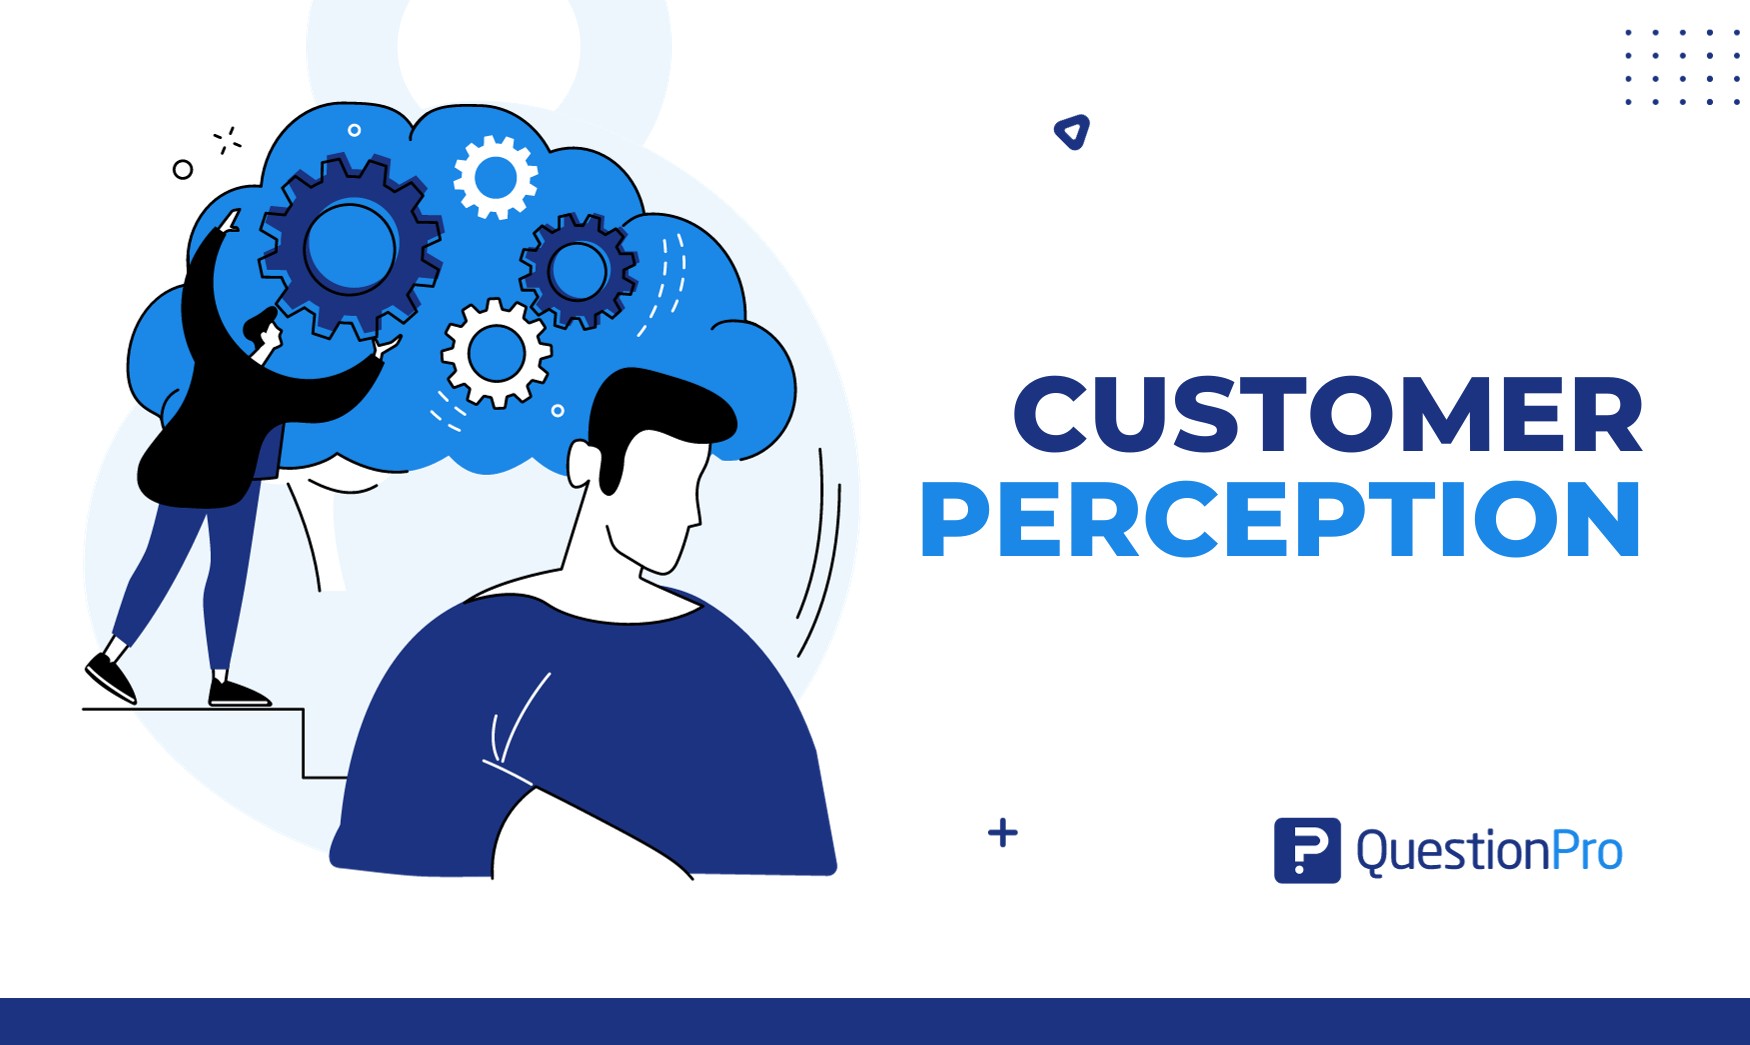 Customer perception